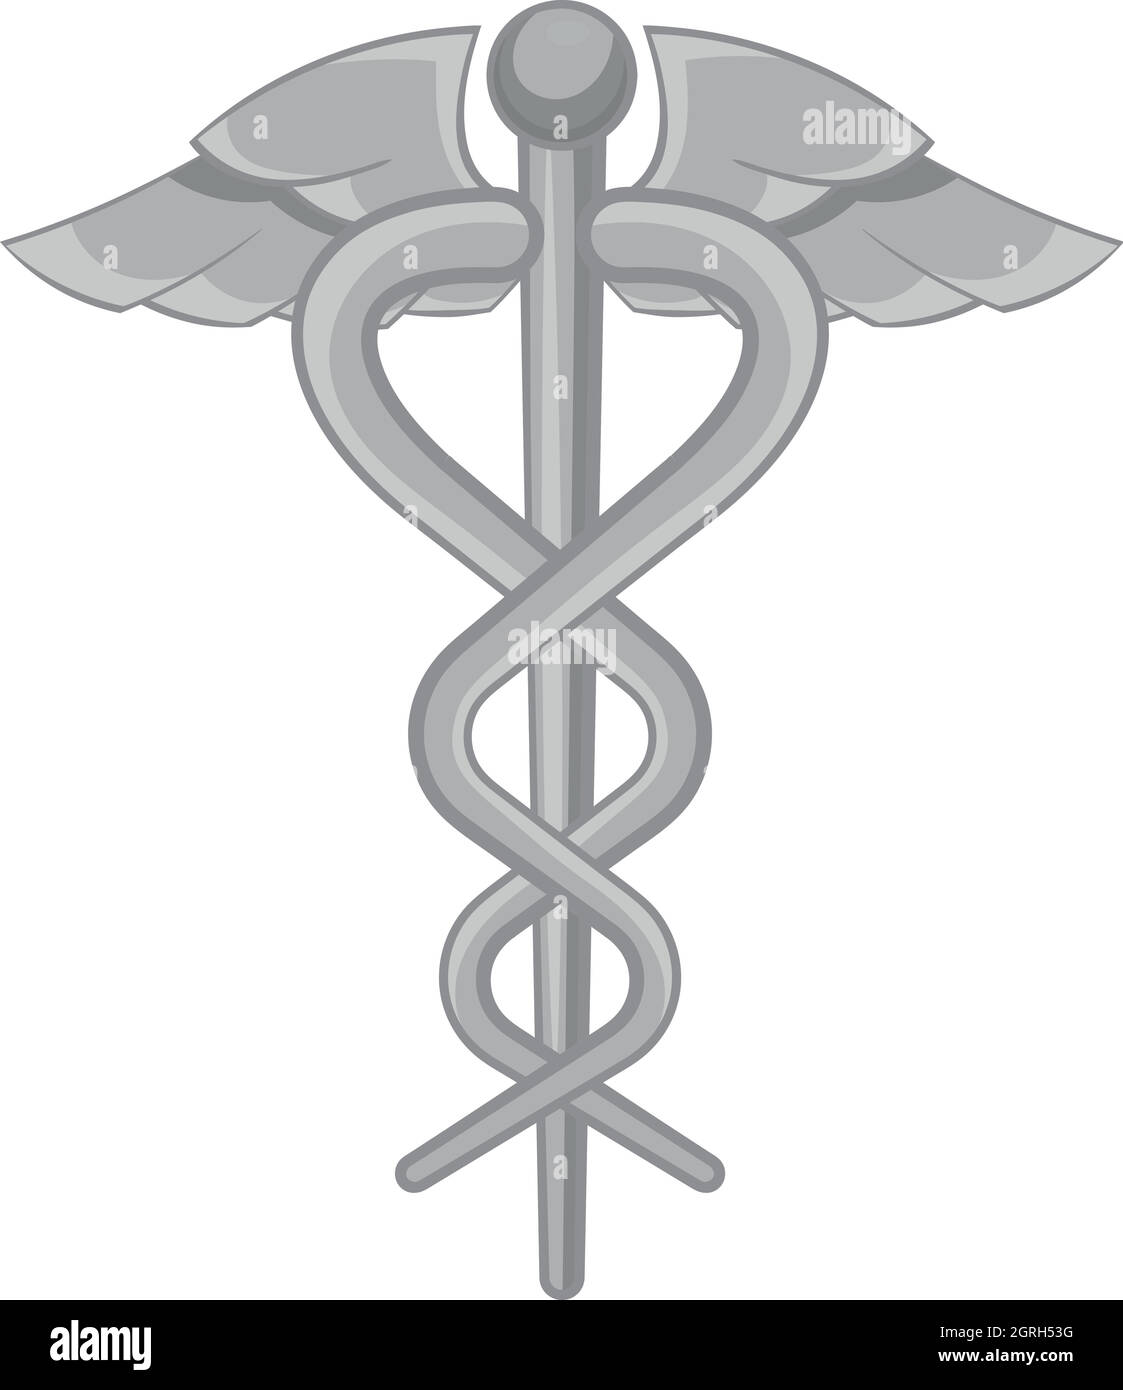 Medical emblem snake icon, black monochrome style Stock Vector